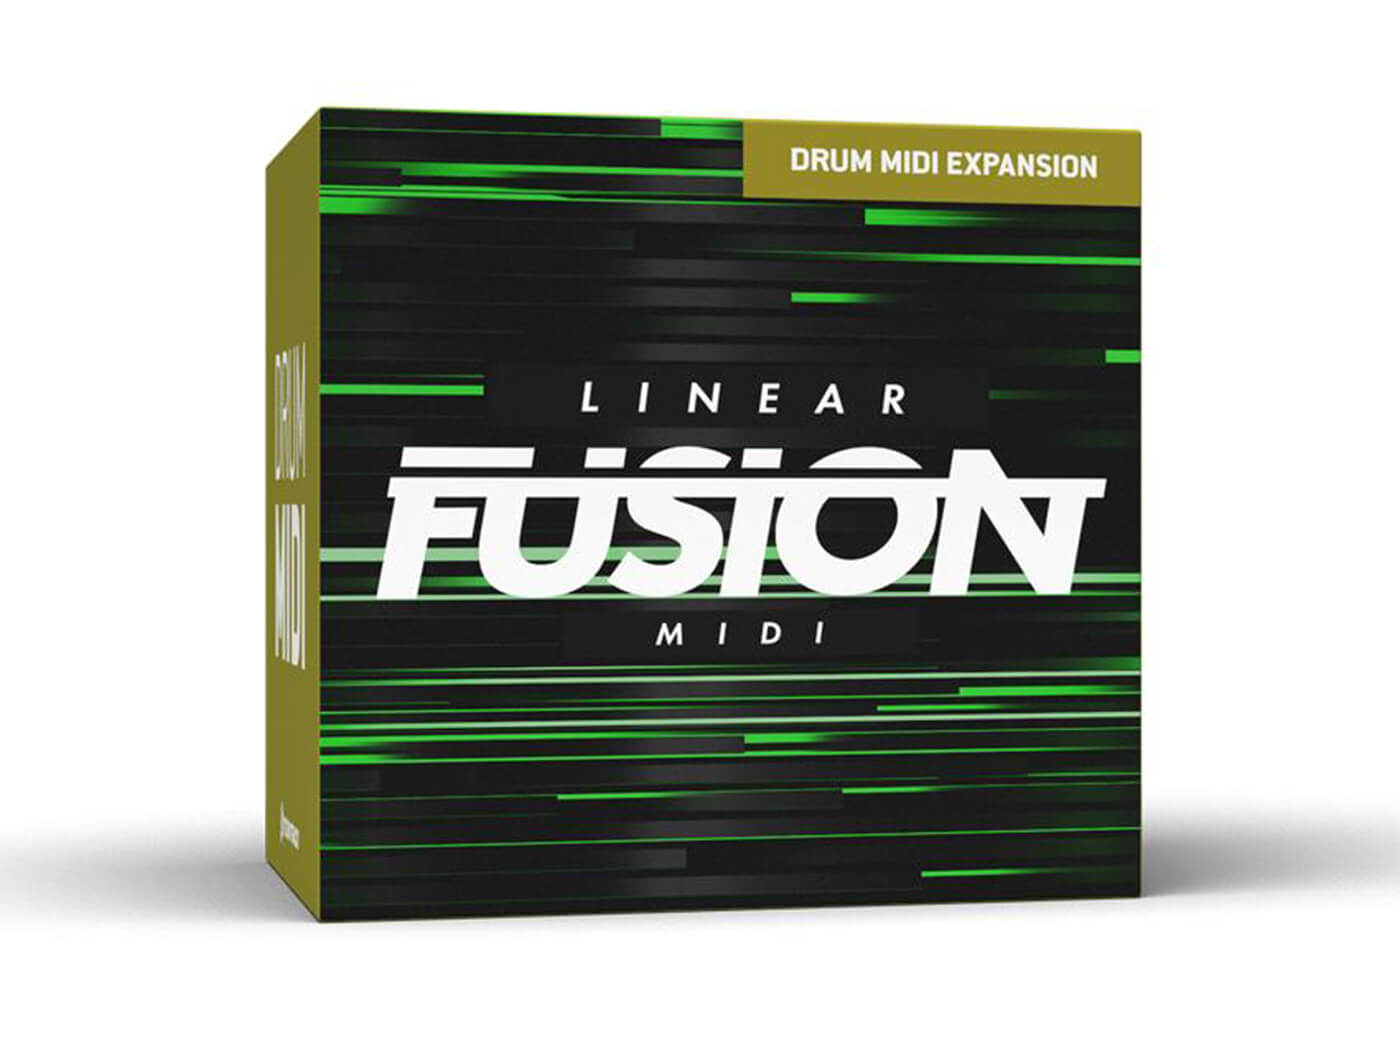 Toontrack MIDI drum linear fusion